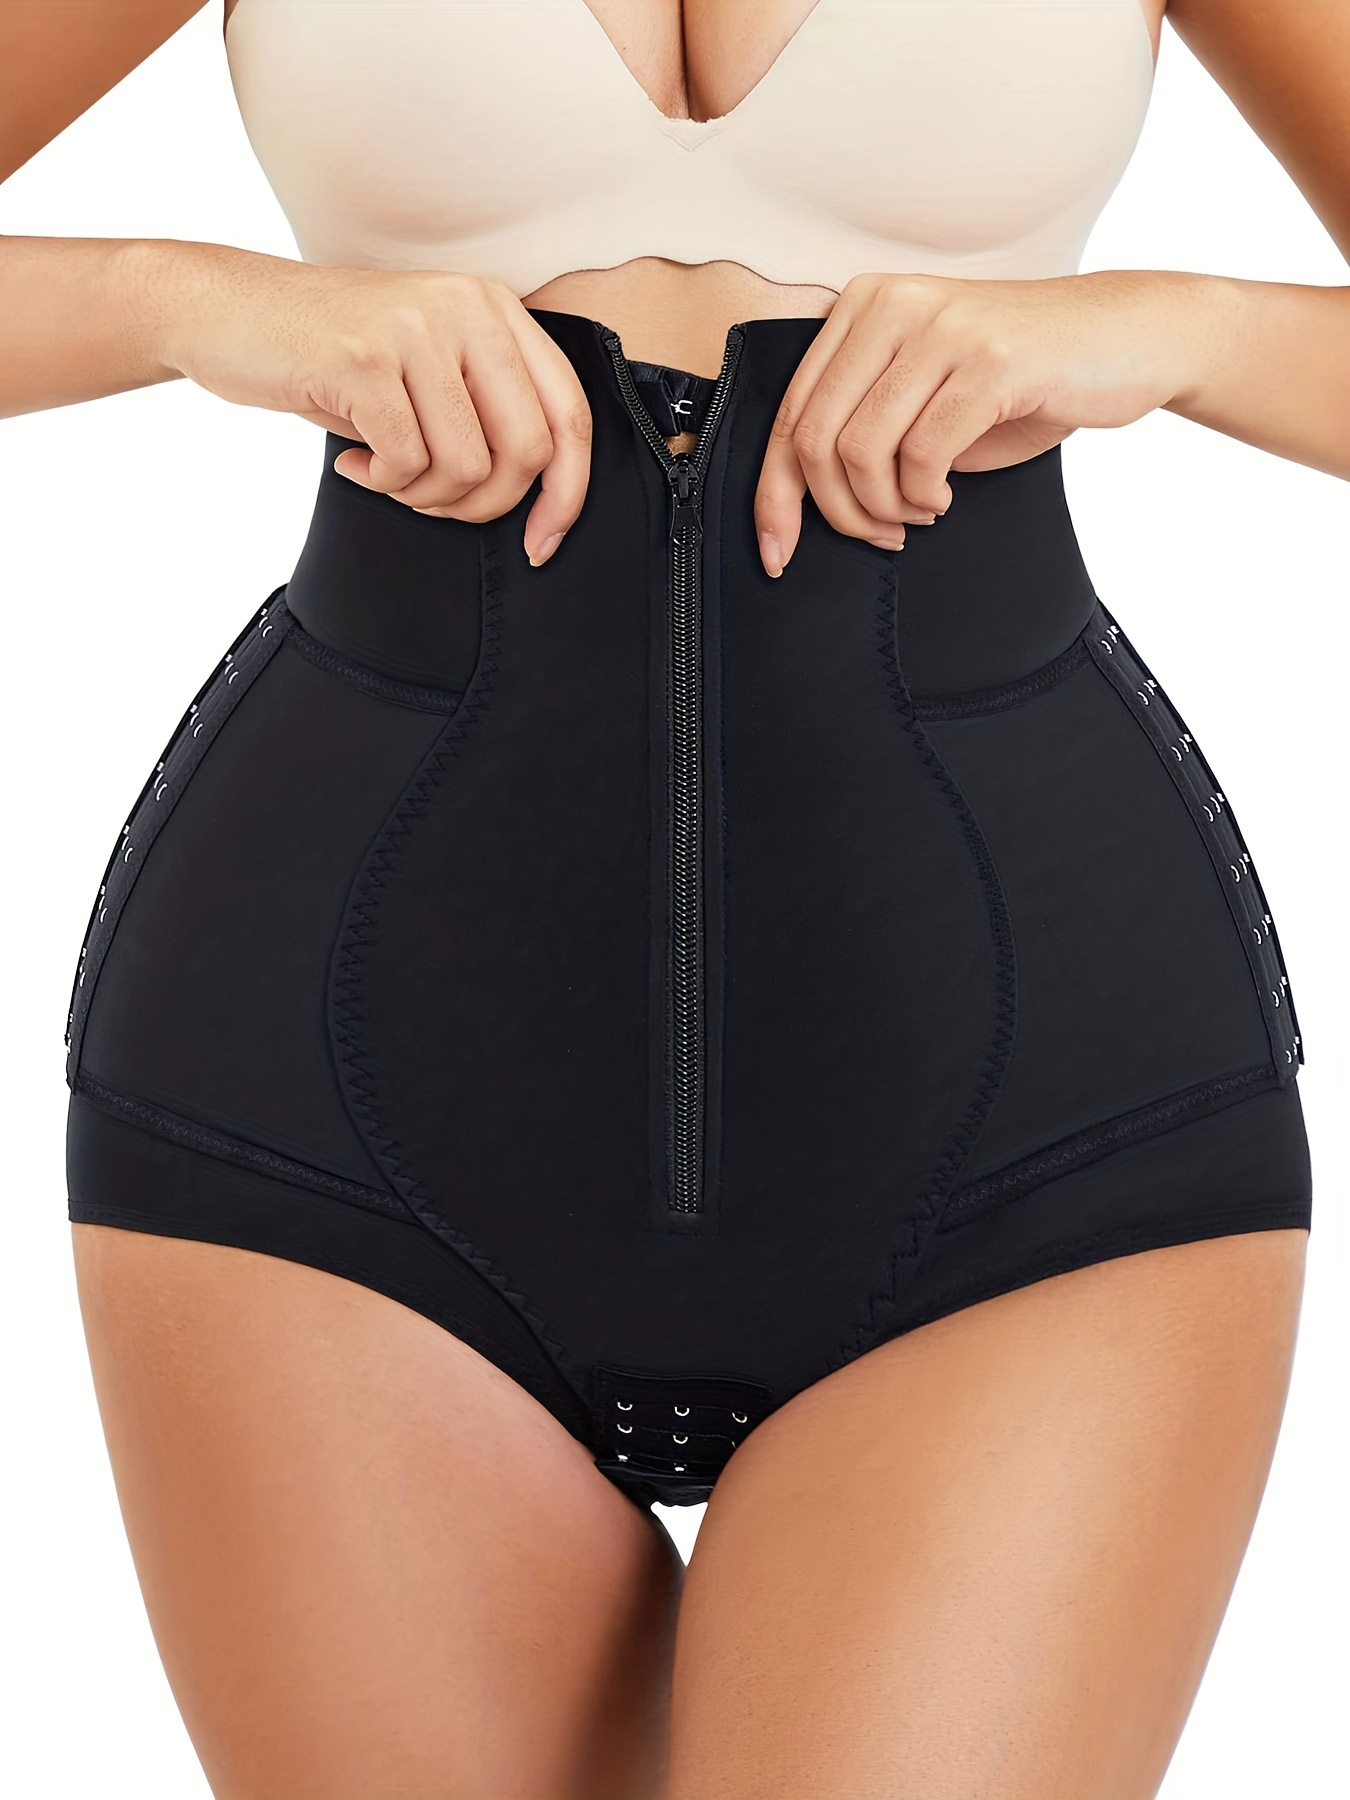  VIERE High Waisted Compression Underwear Women - Shapewear  For Women Tummy Control